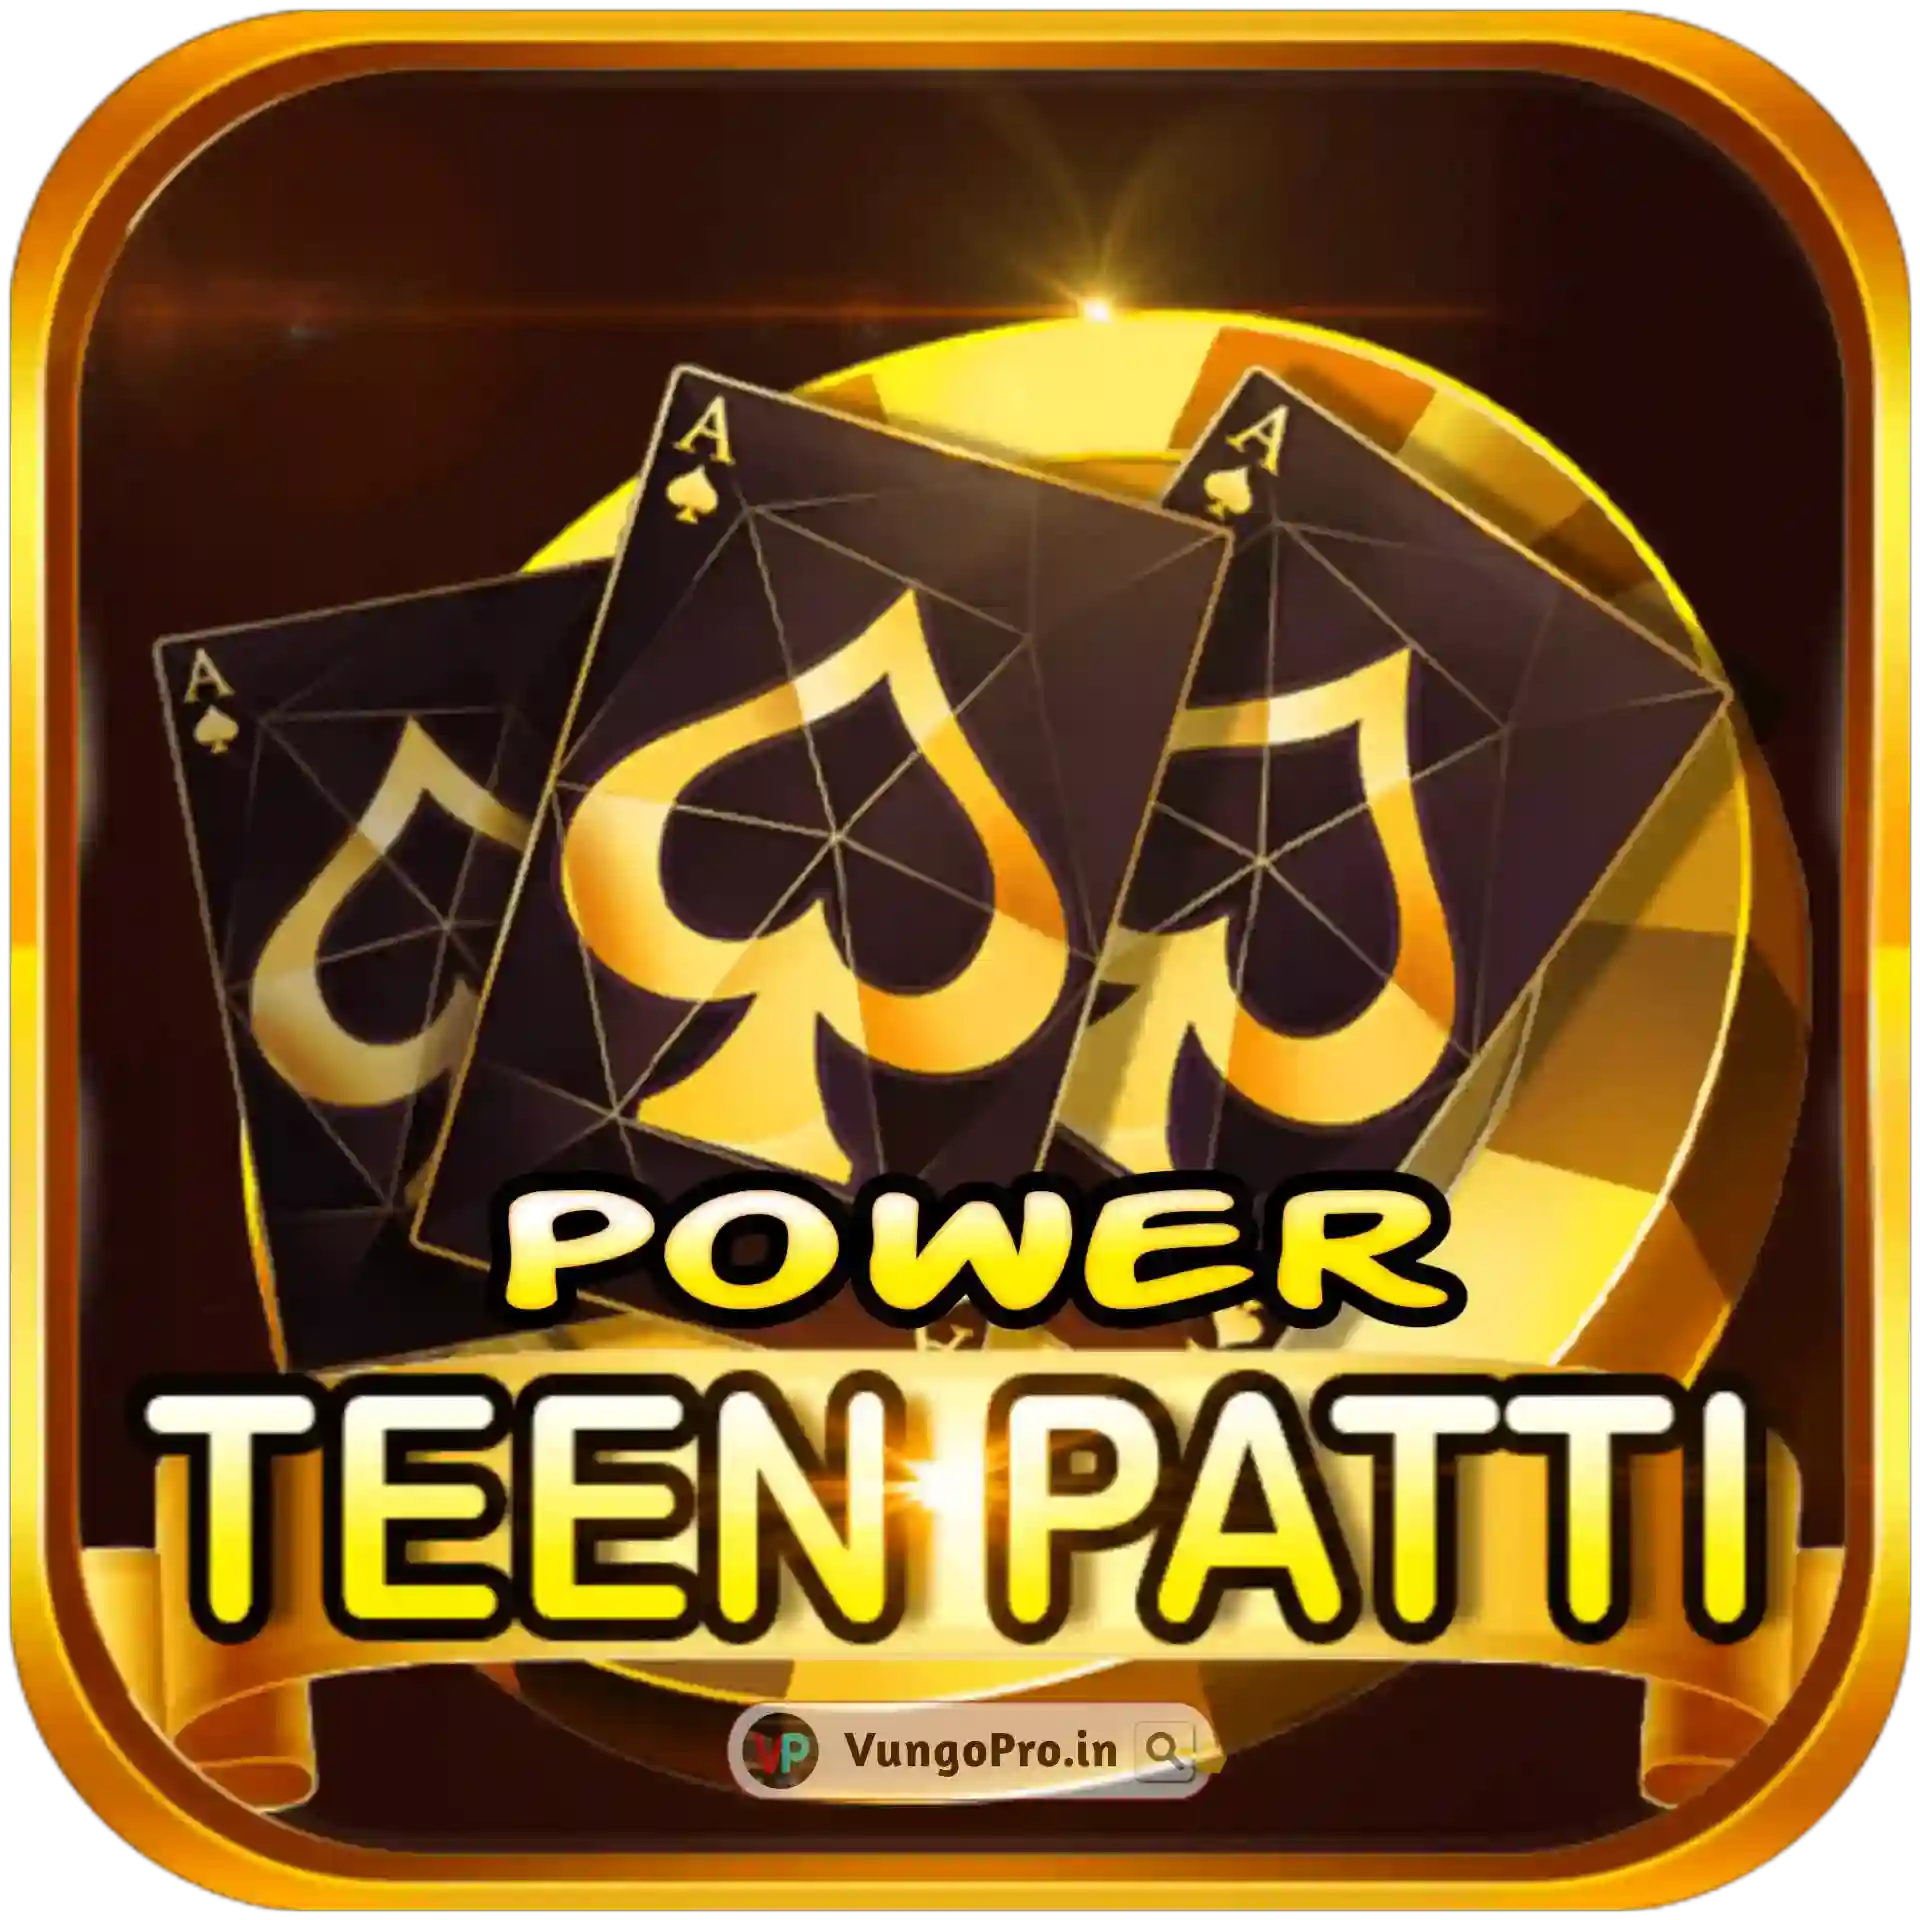 TEEN PATTI POWER APK DOWNLOAD | BONUS 100 FREE | TEEN PATTI POWER |